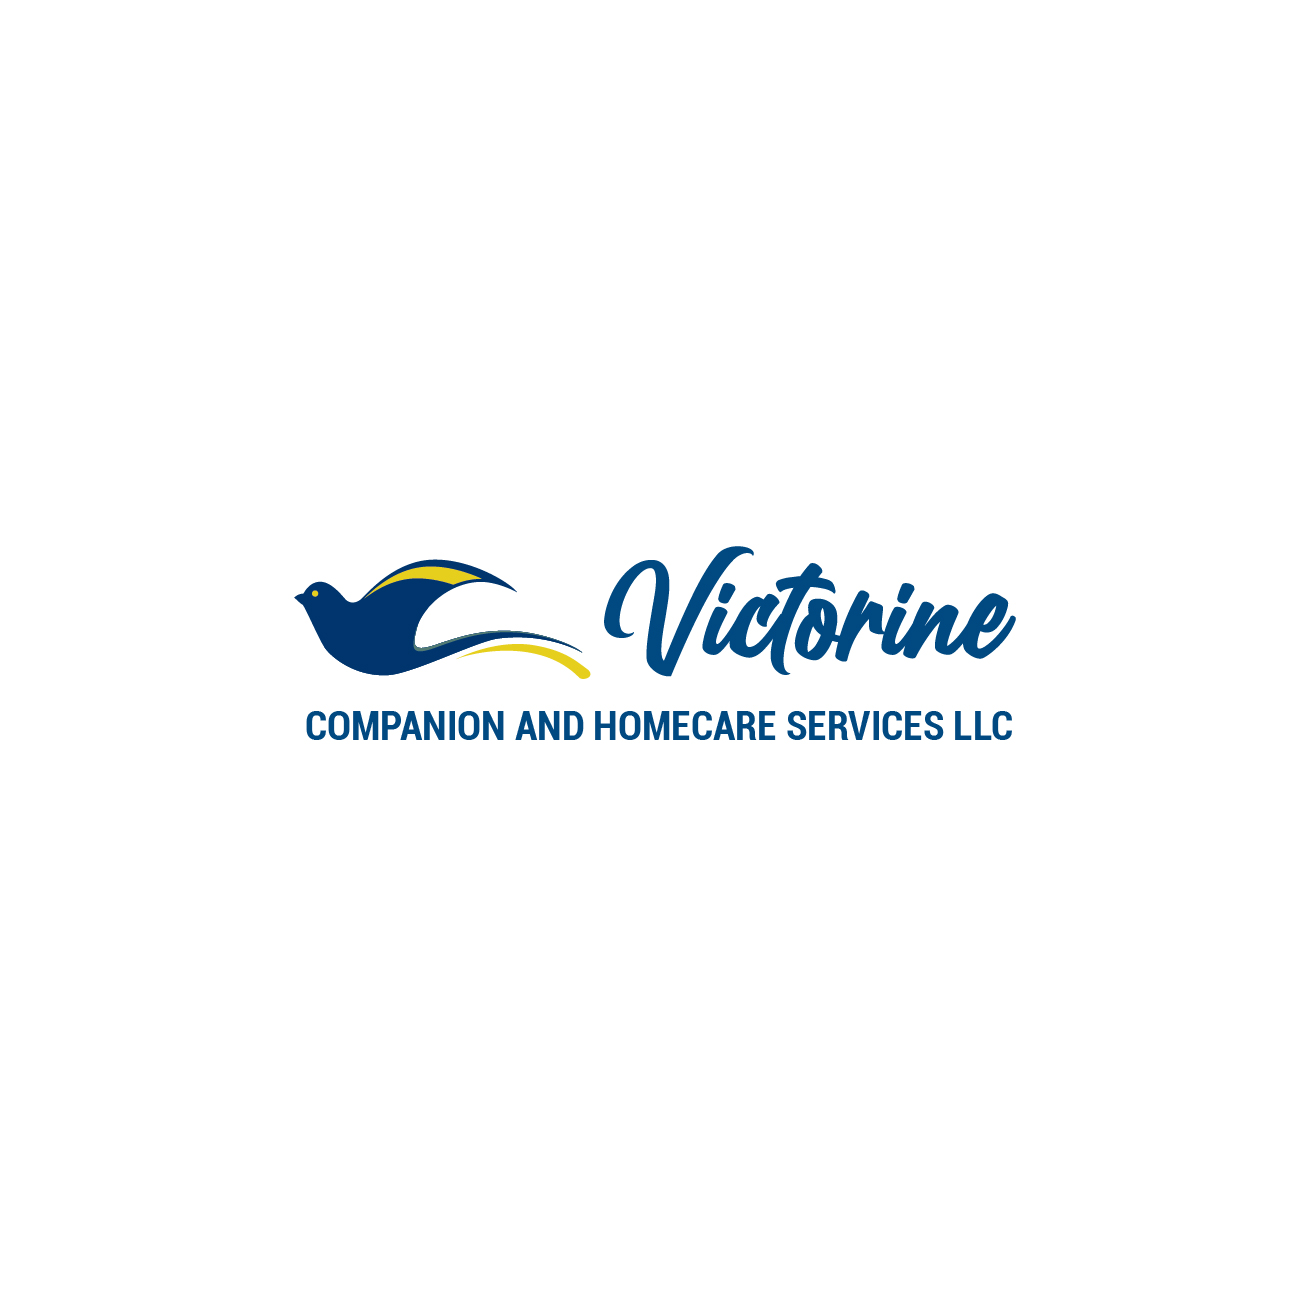 Victorine Companion and Homecare Services image